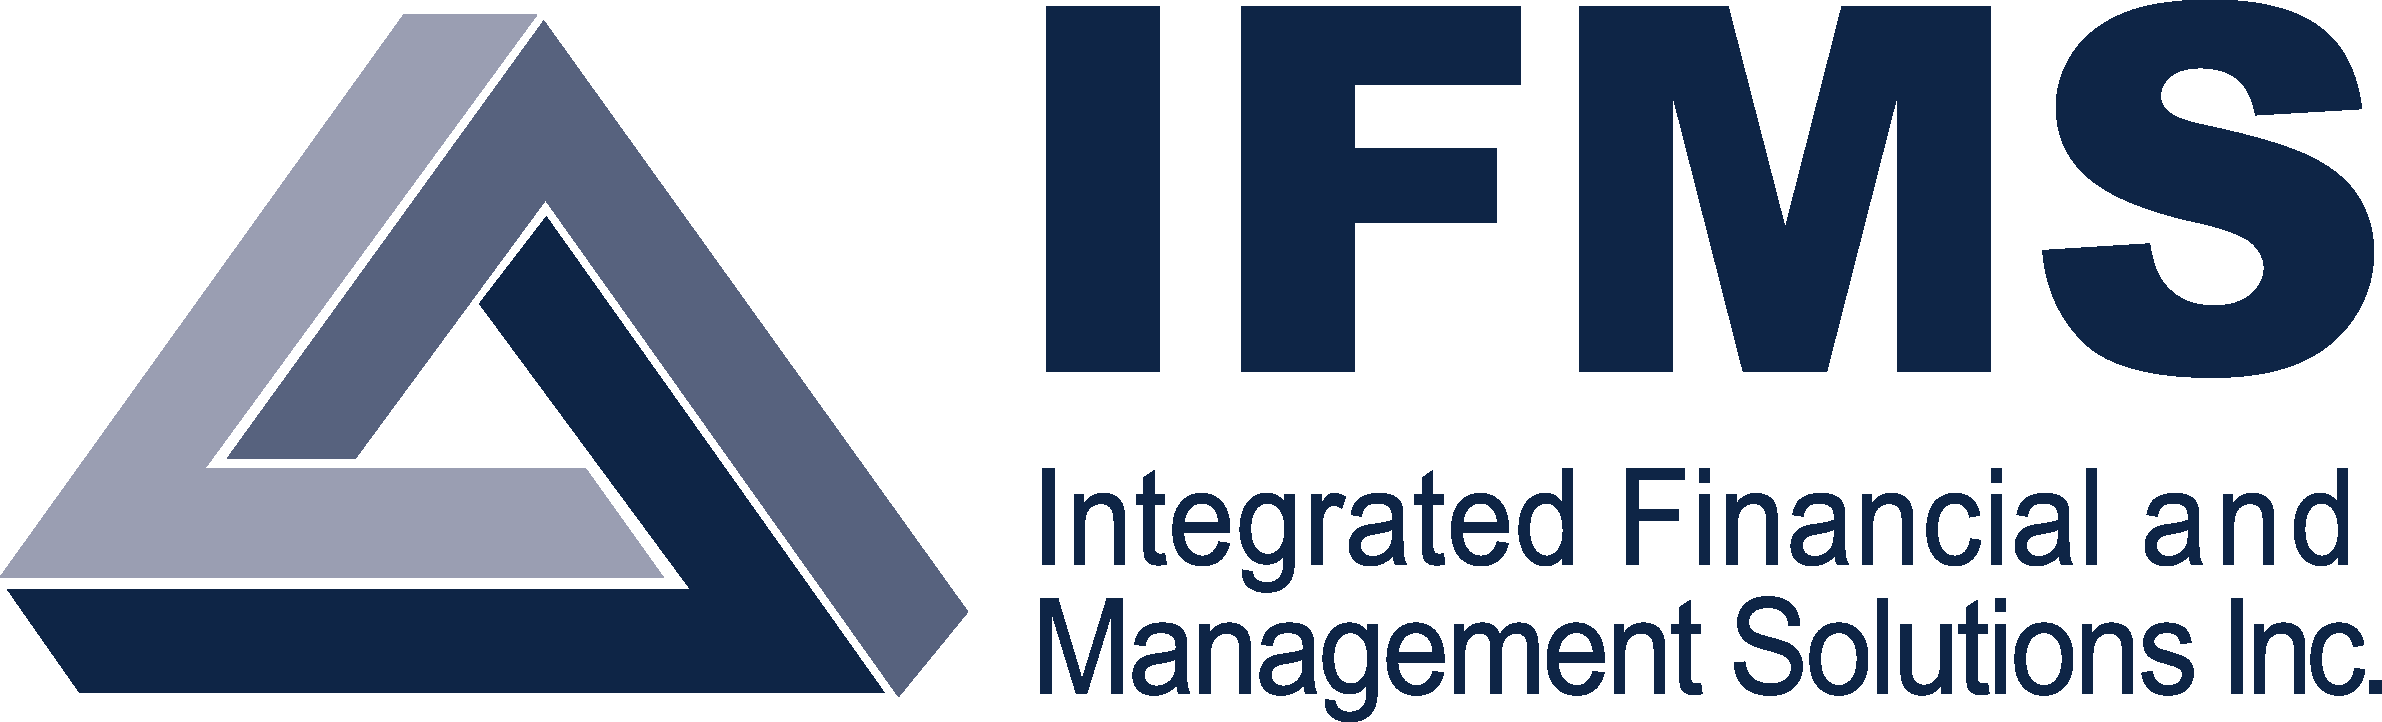 IFMS Logo HR